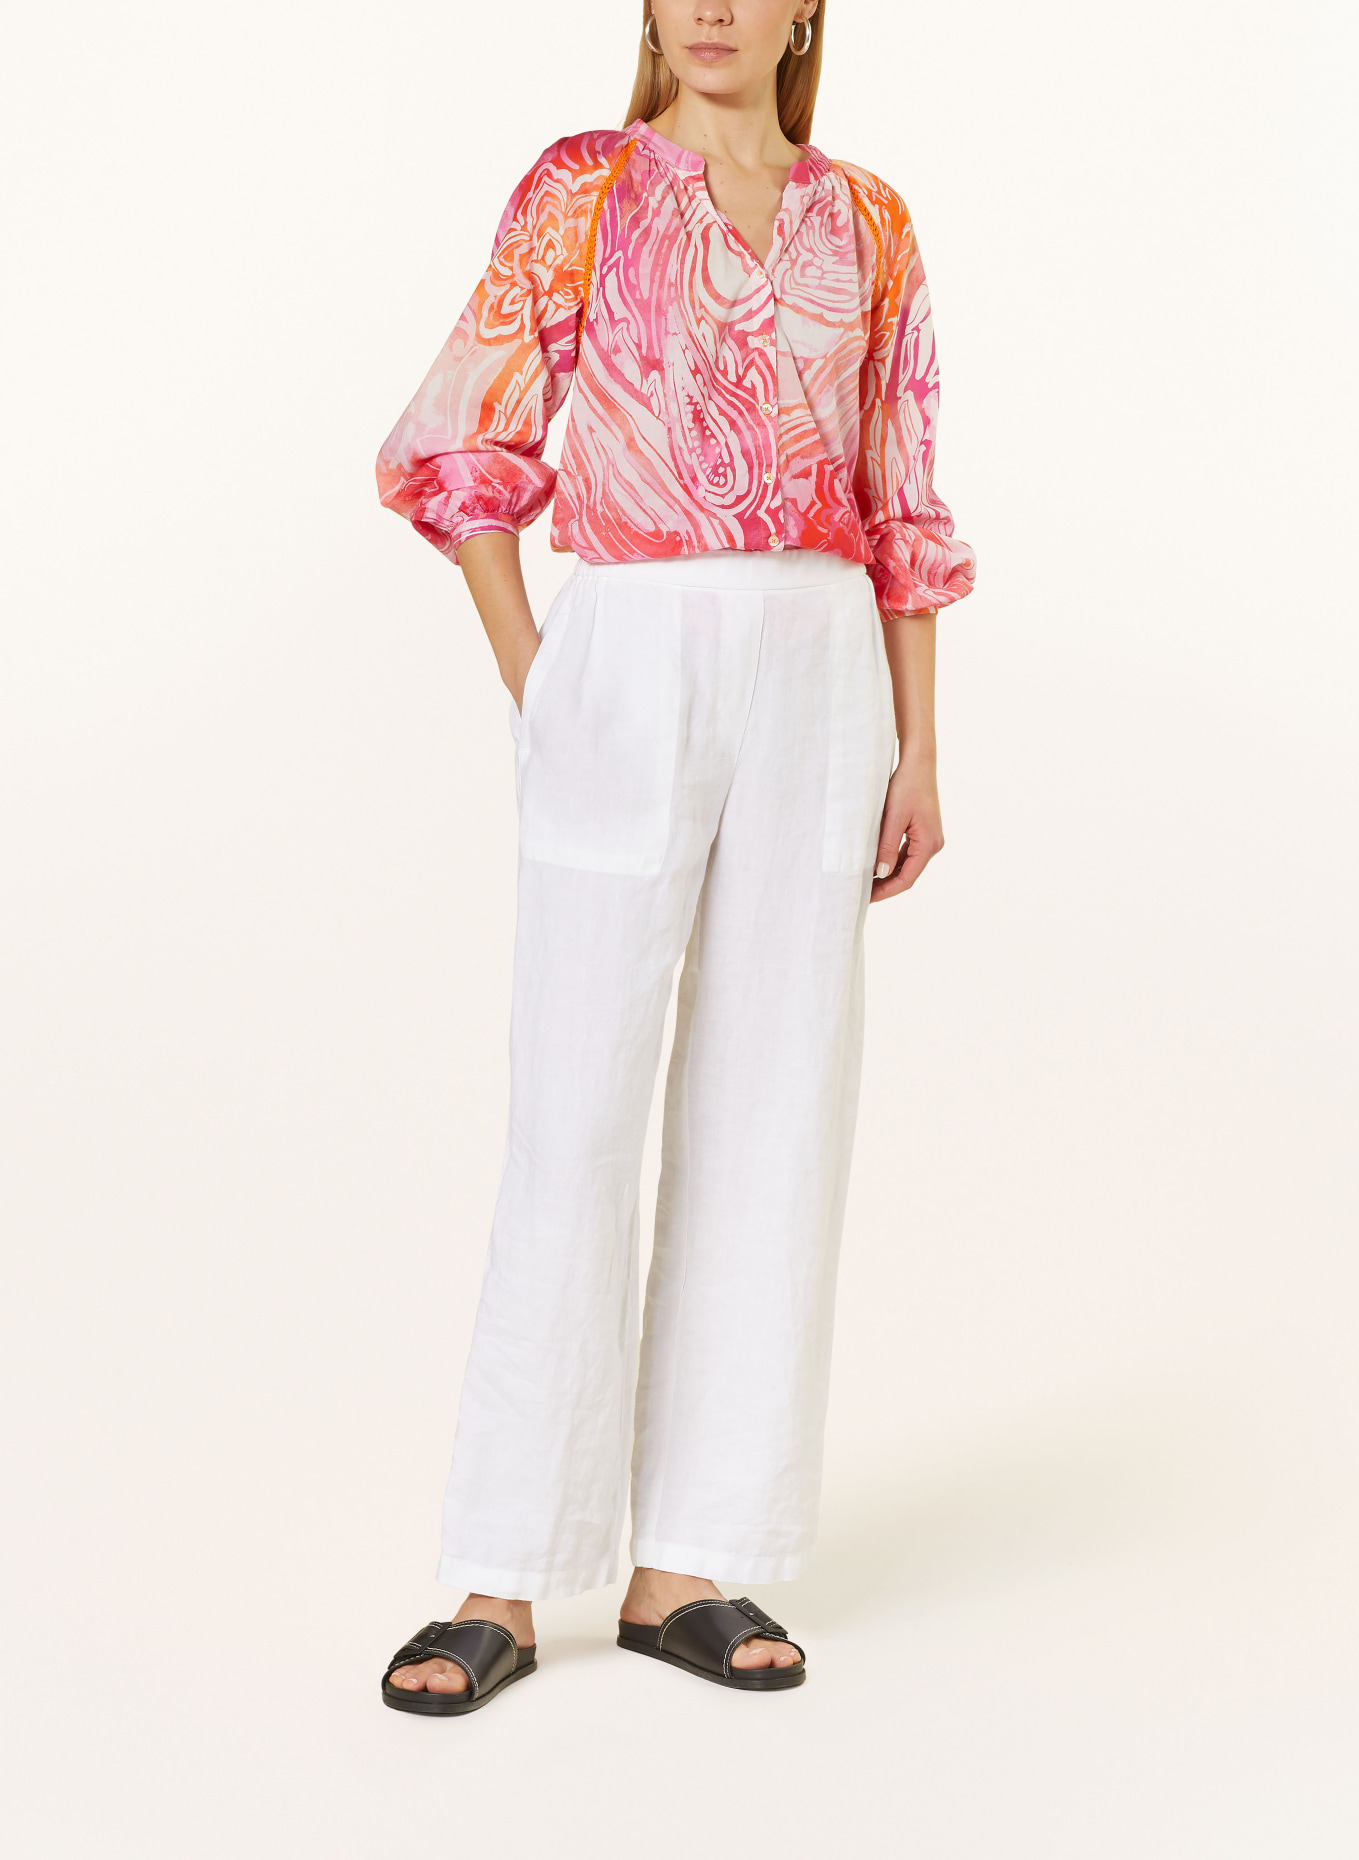 Emily VAN DEN BERGH Shirt blouse, Color: ORANGE/ PINK (Image 2)